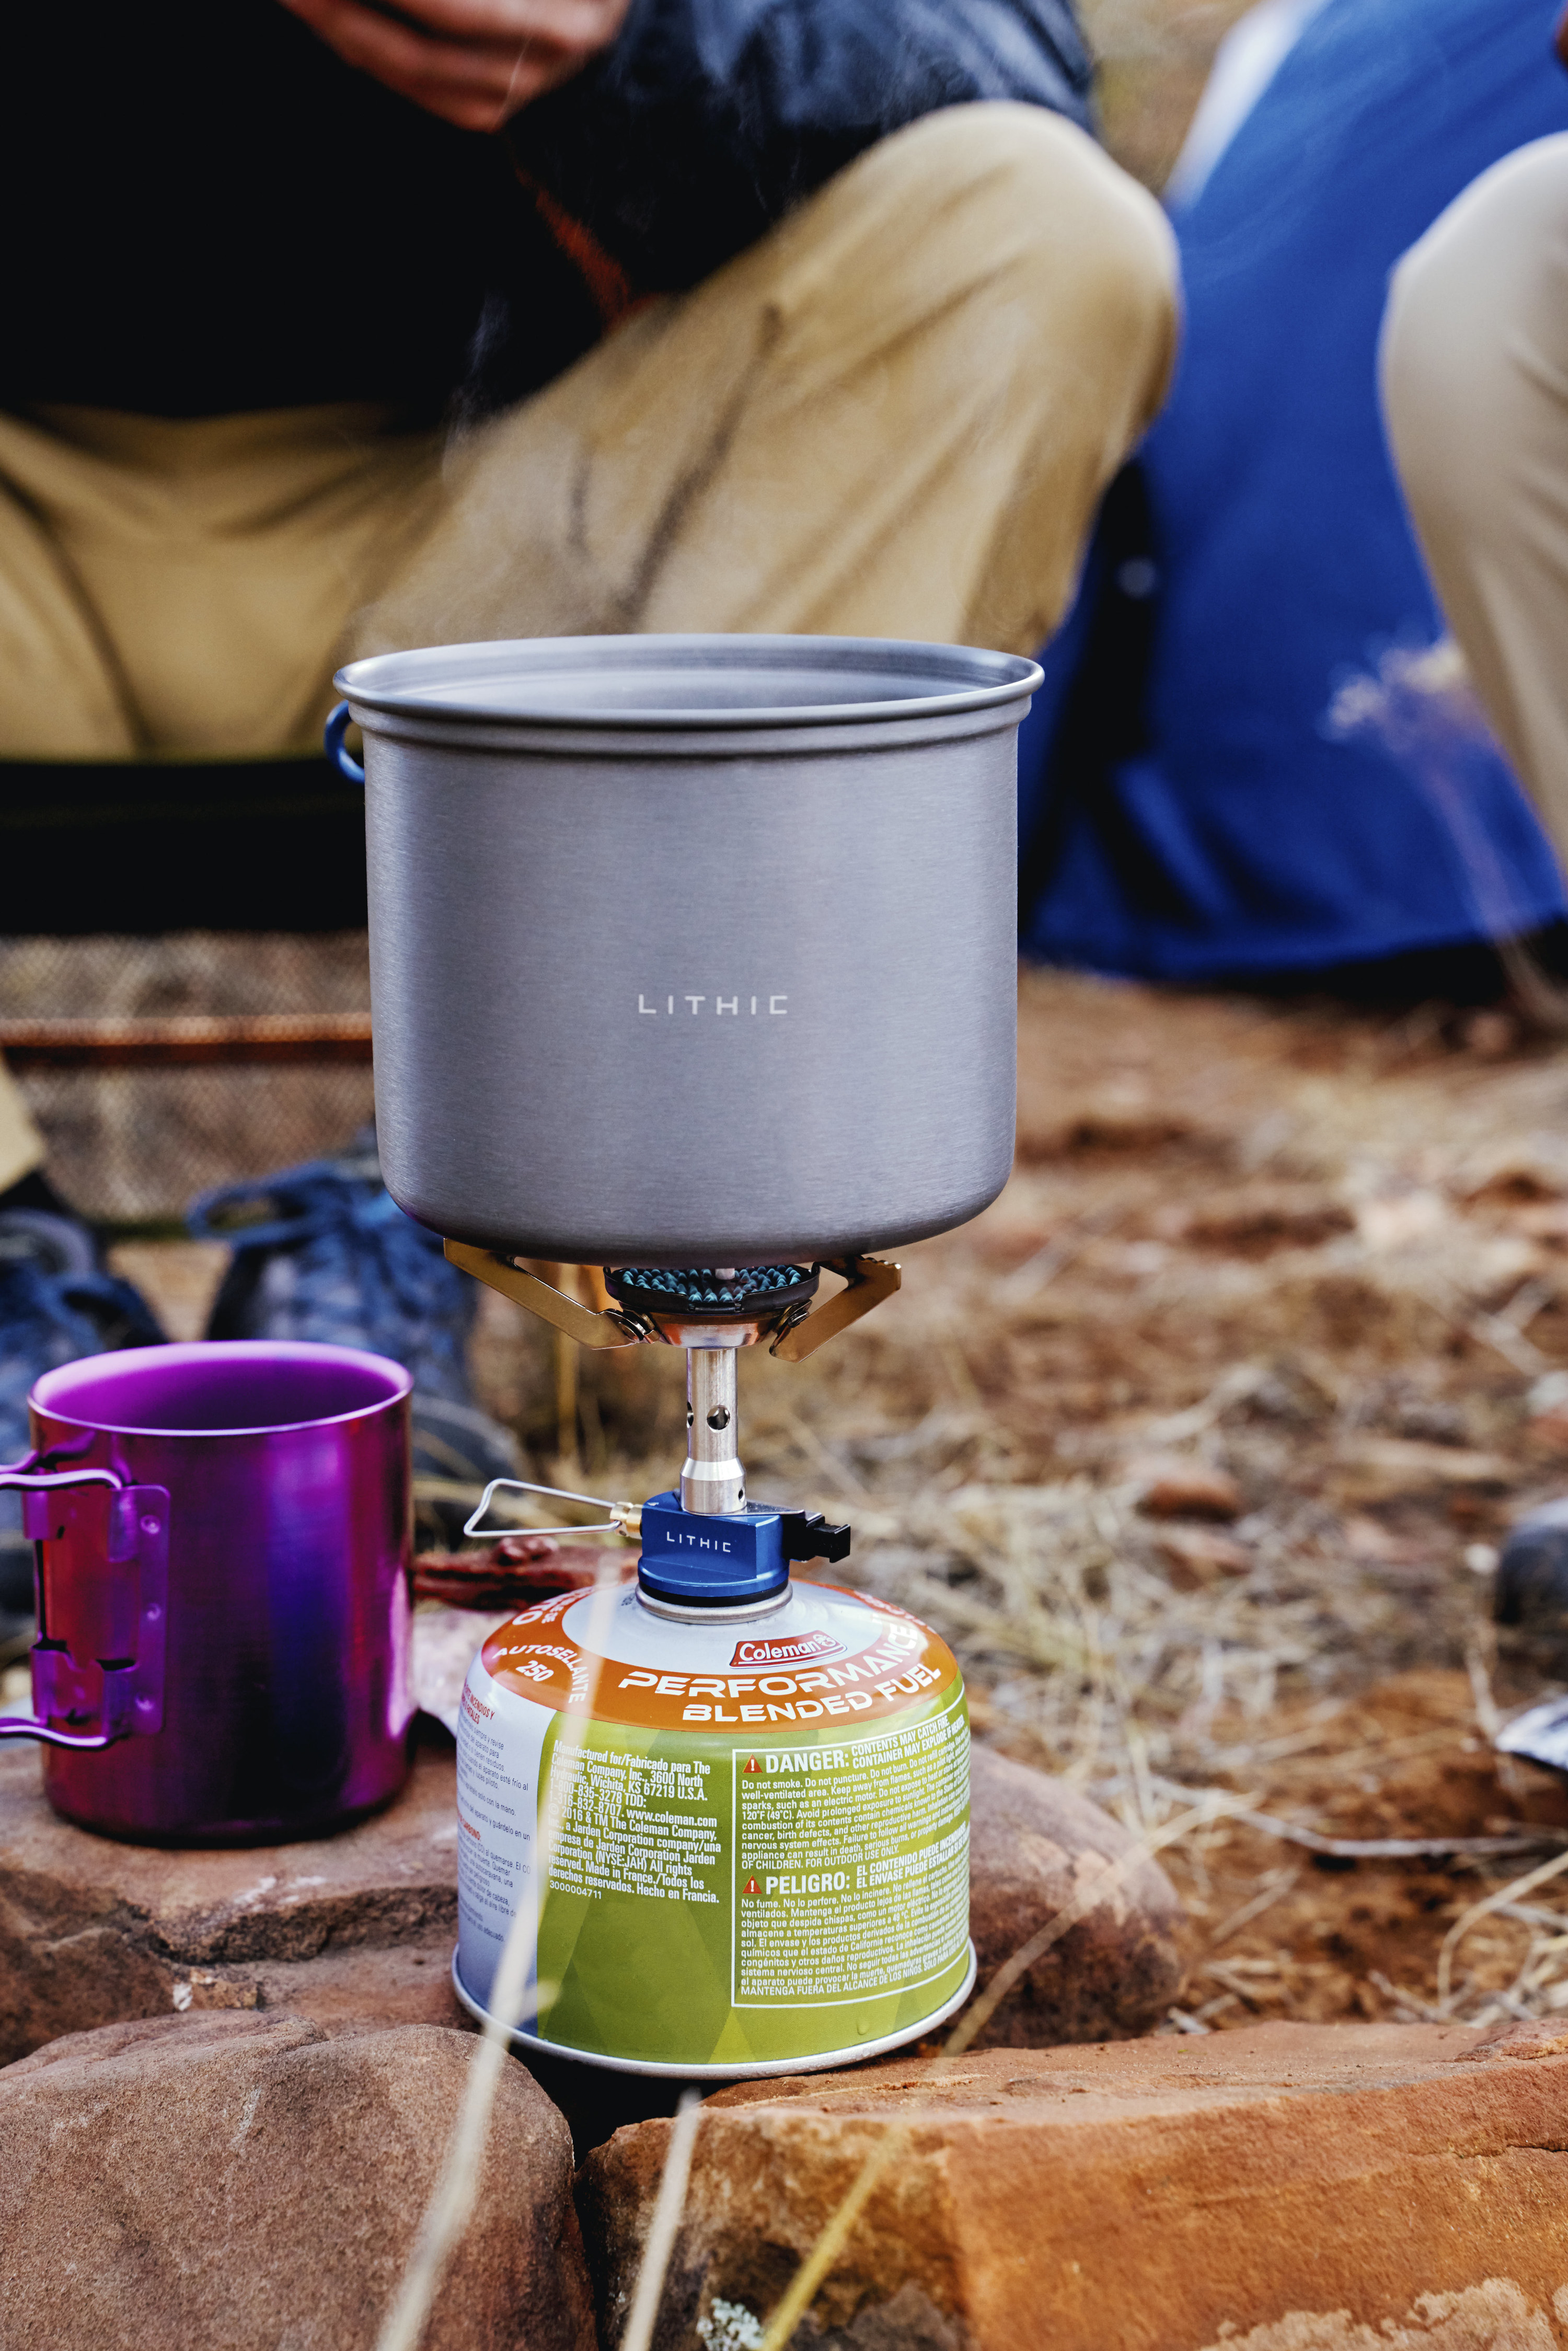 the gray camping stove